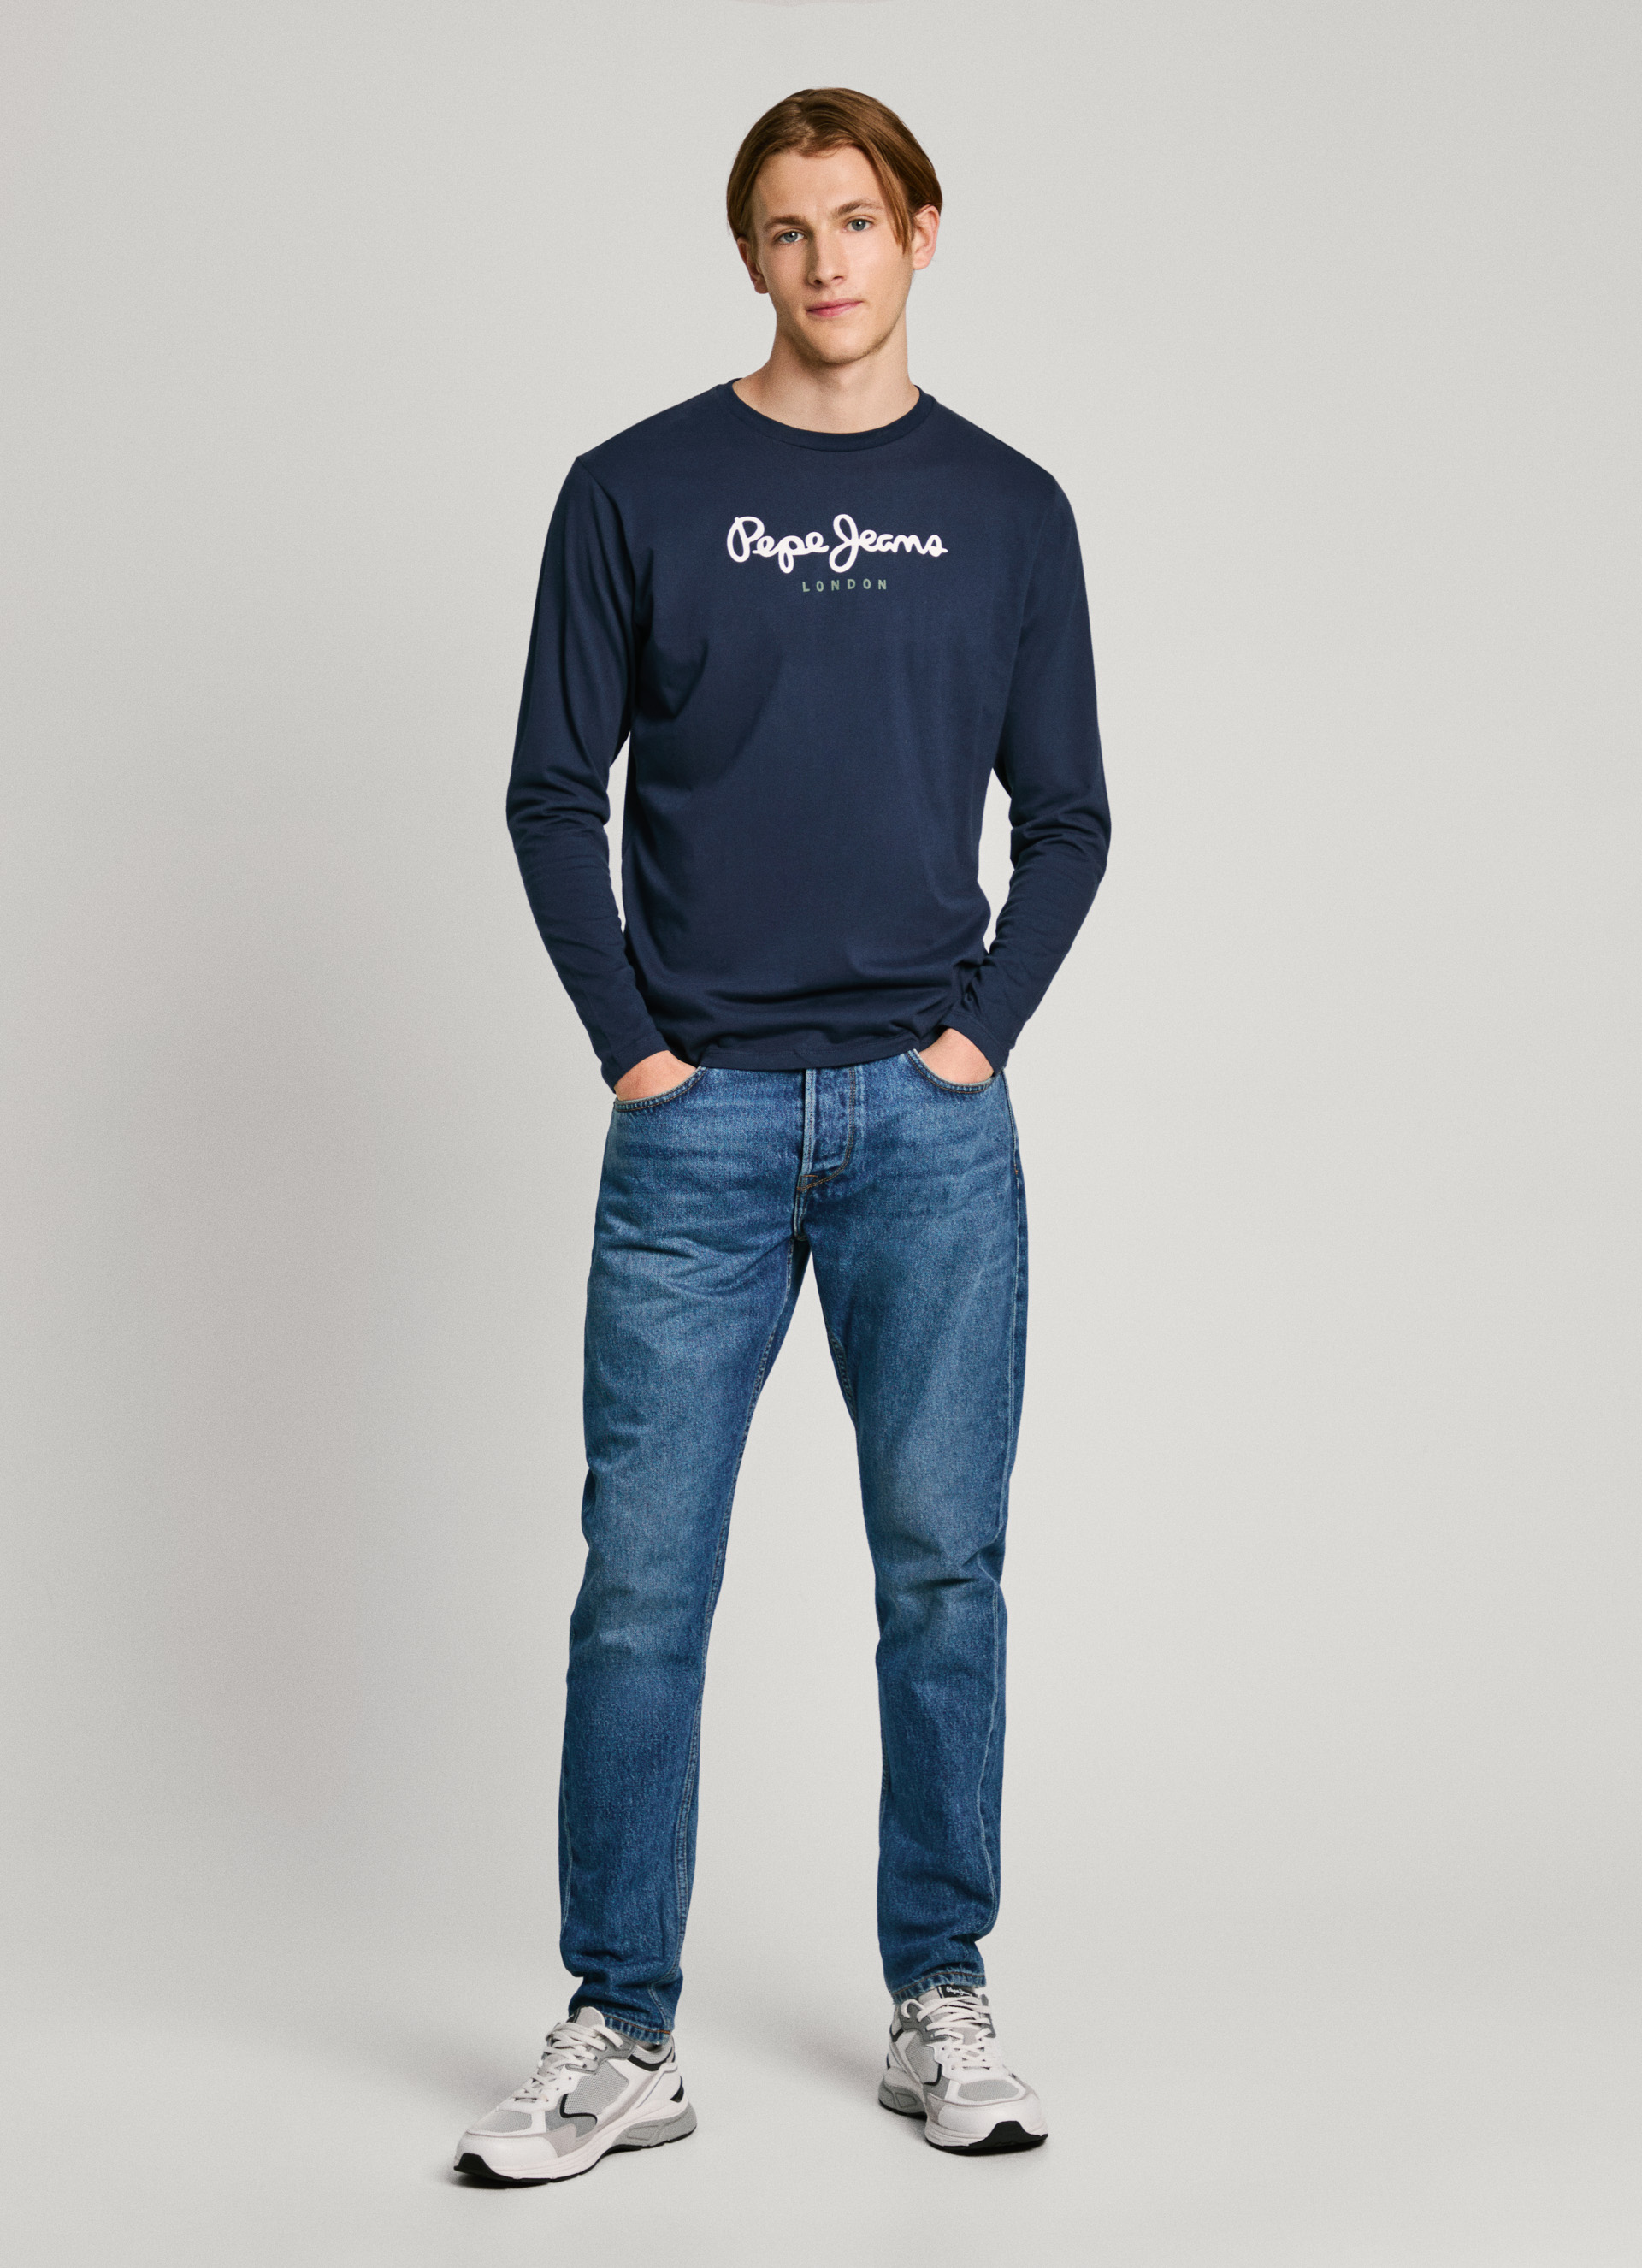 Verbanning Clam Doodskaak Printed Logo Cotton T-Shirt | Pepe Jeans